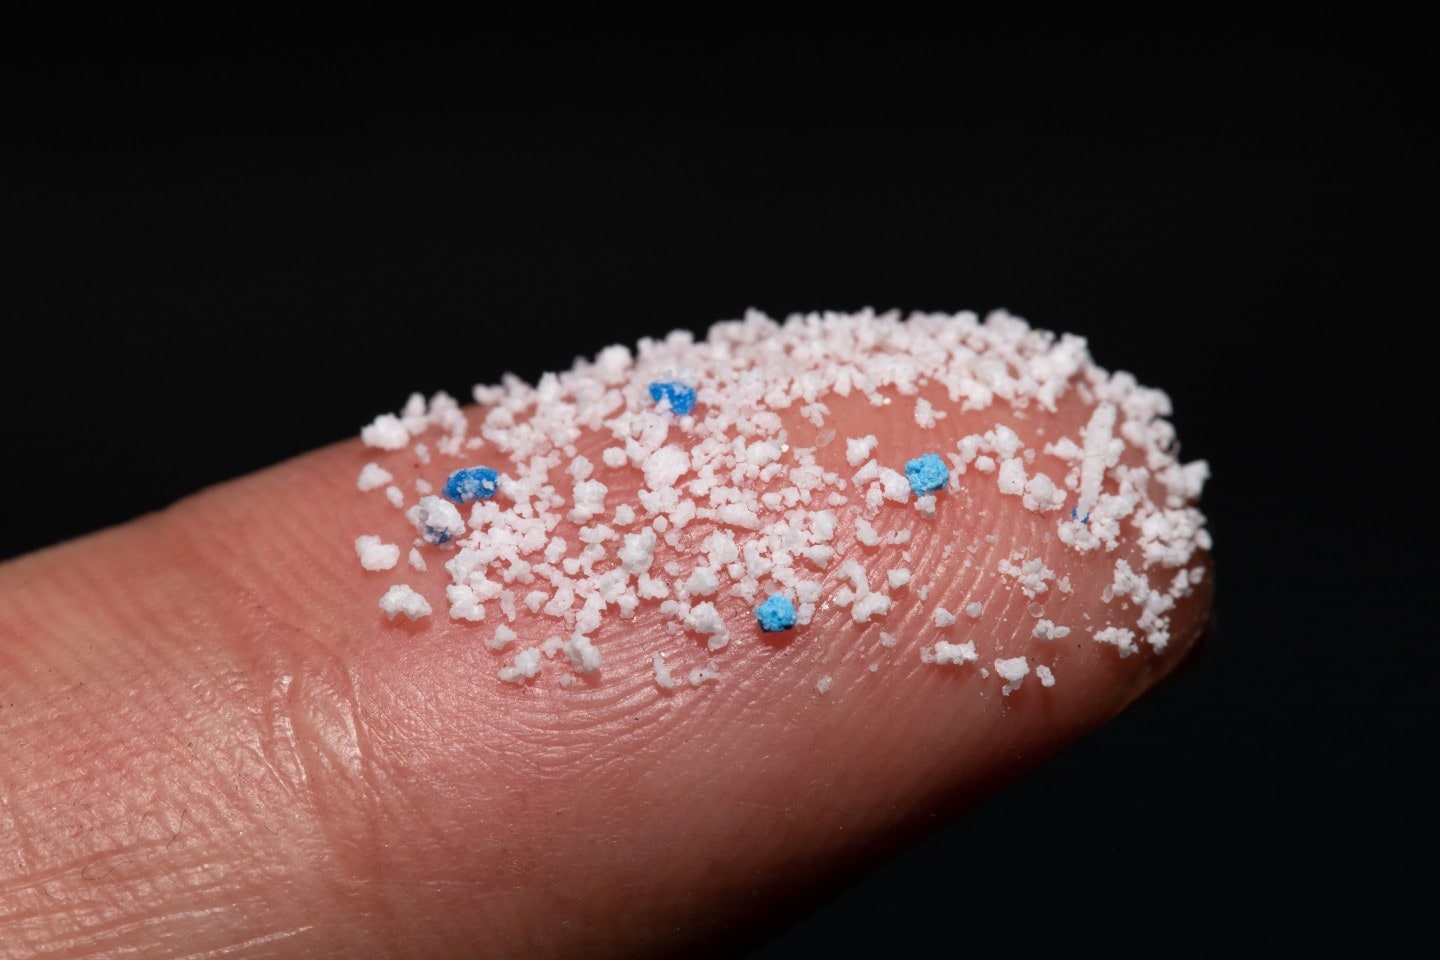 microplastics on a Finger